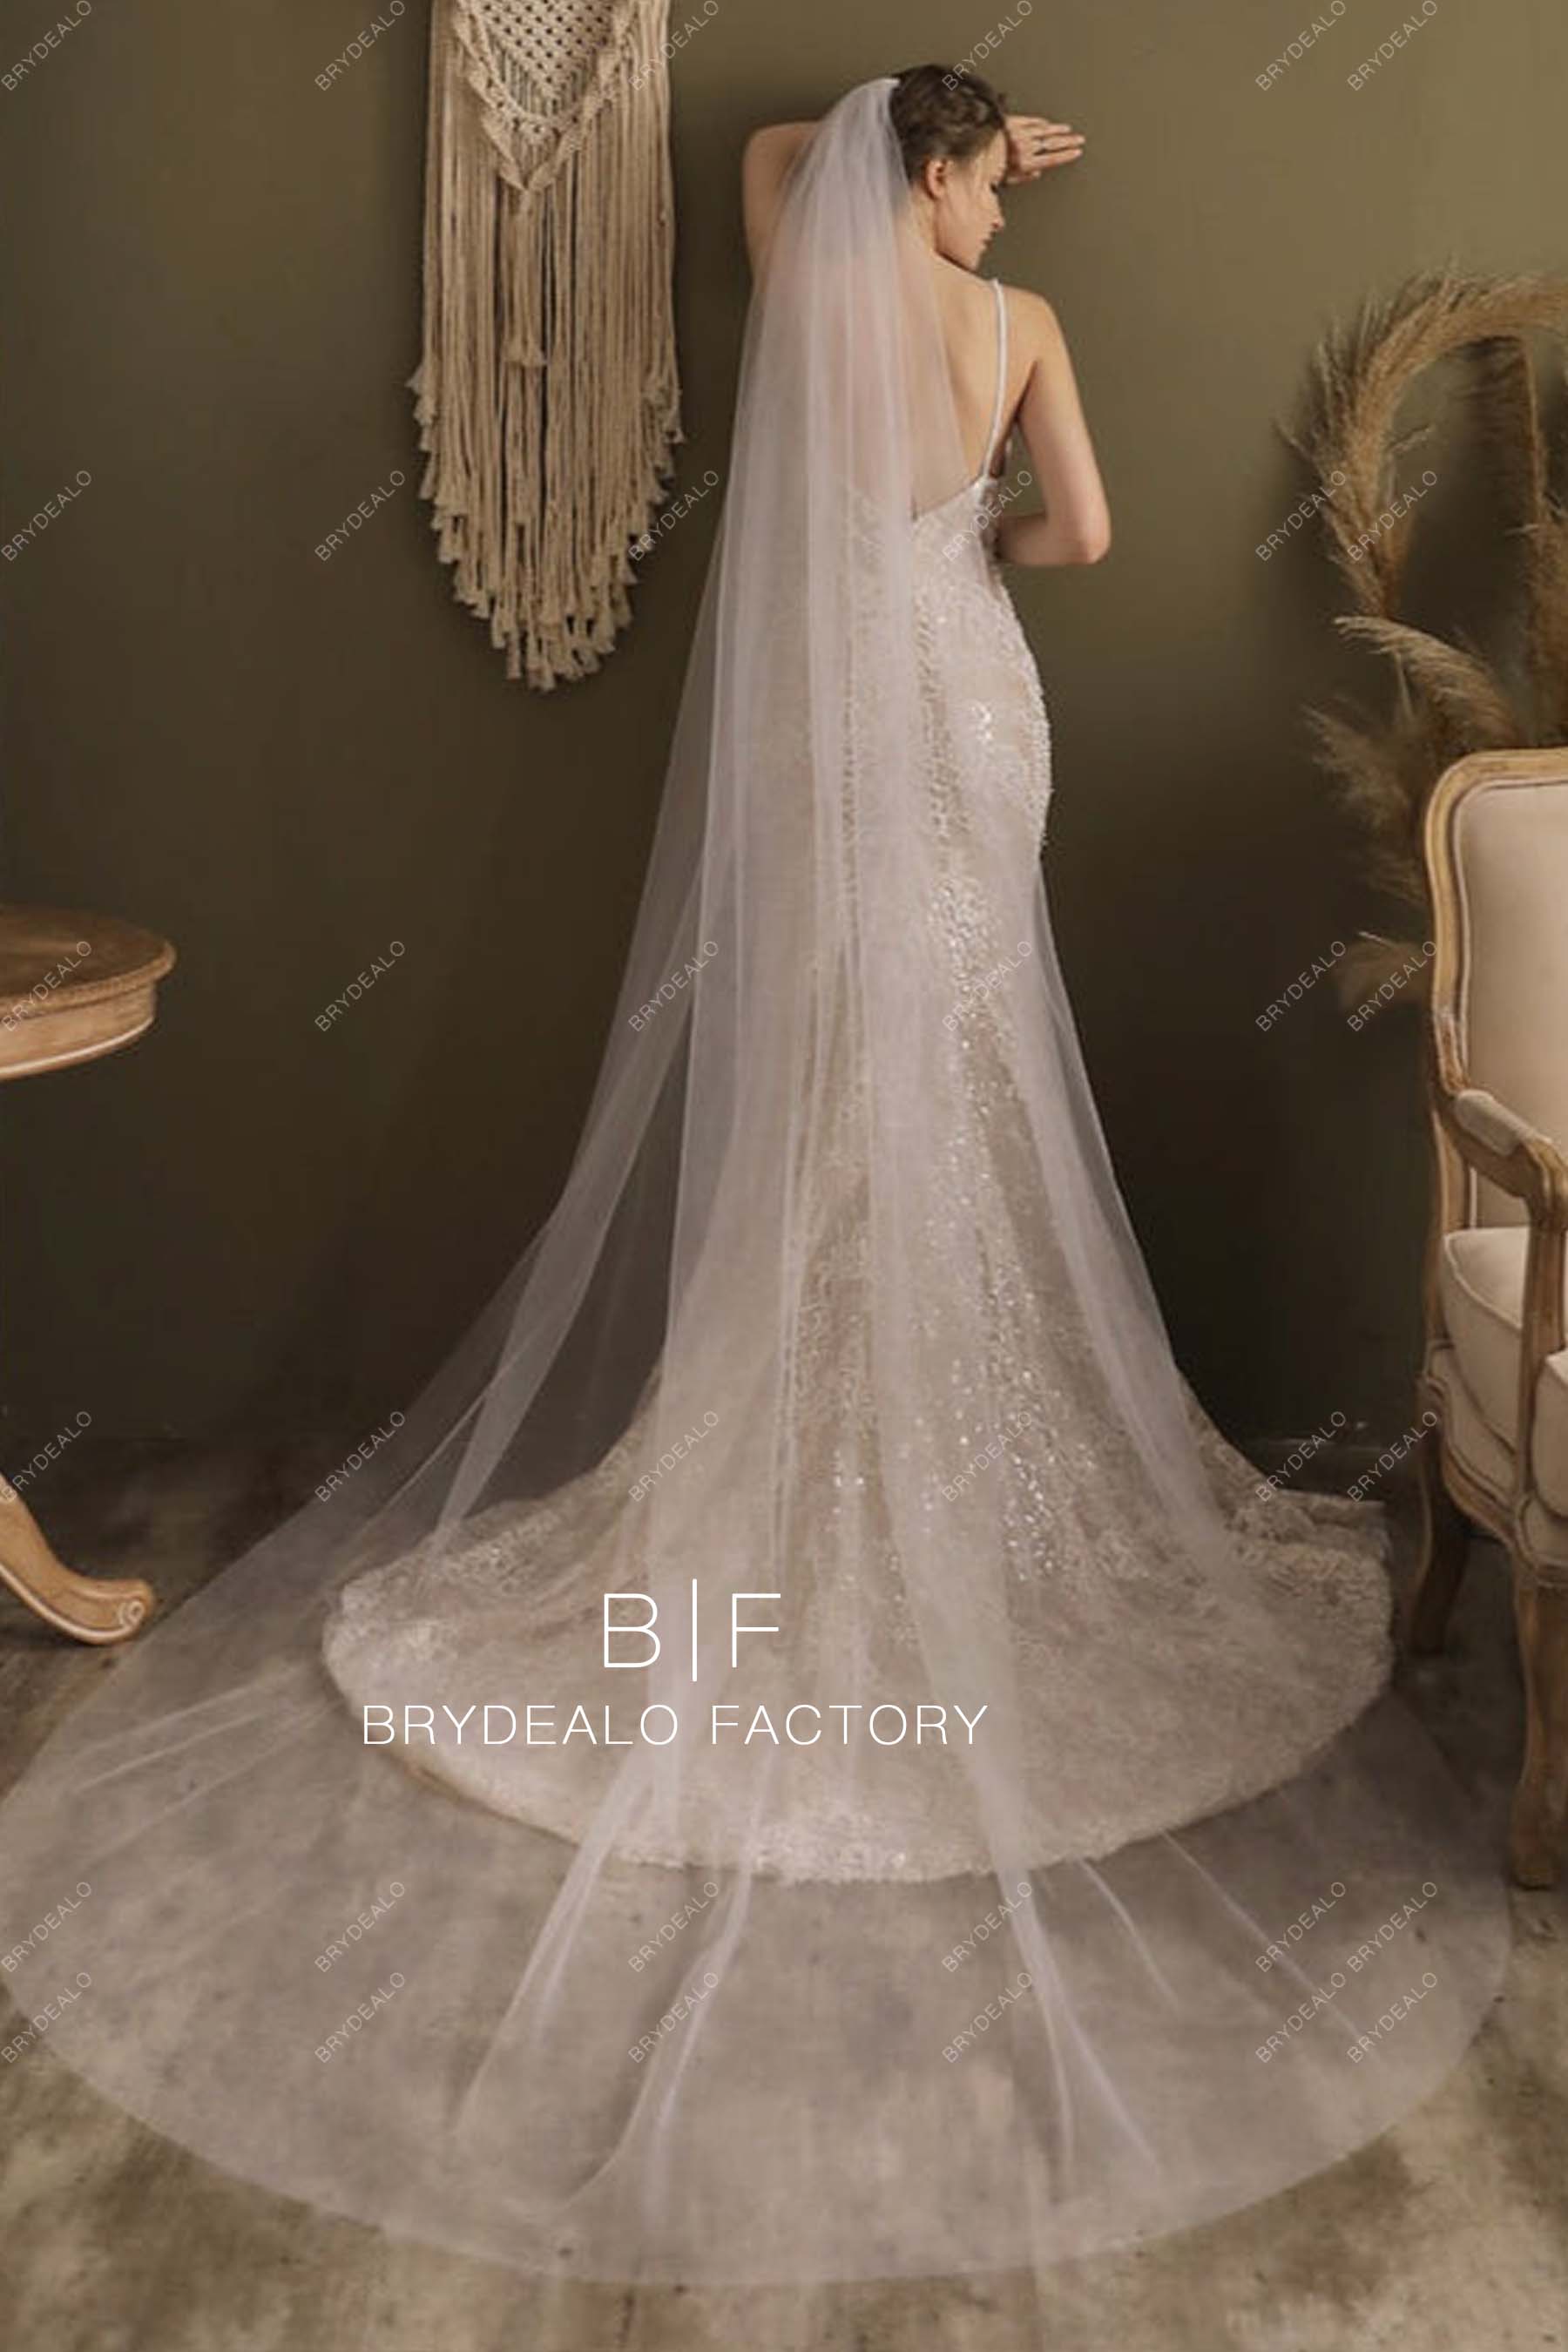 simple plain tulle wedding veil